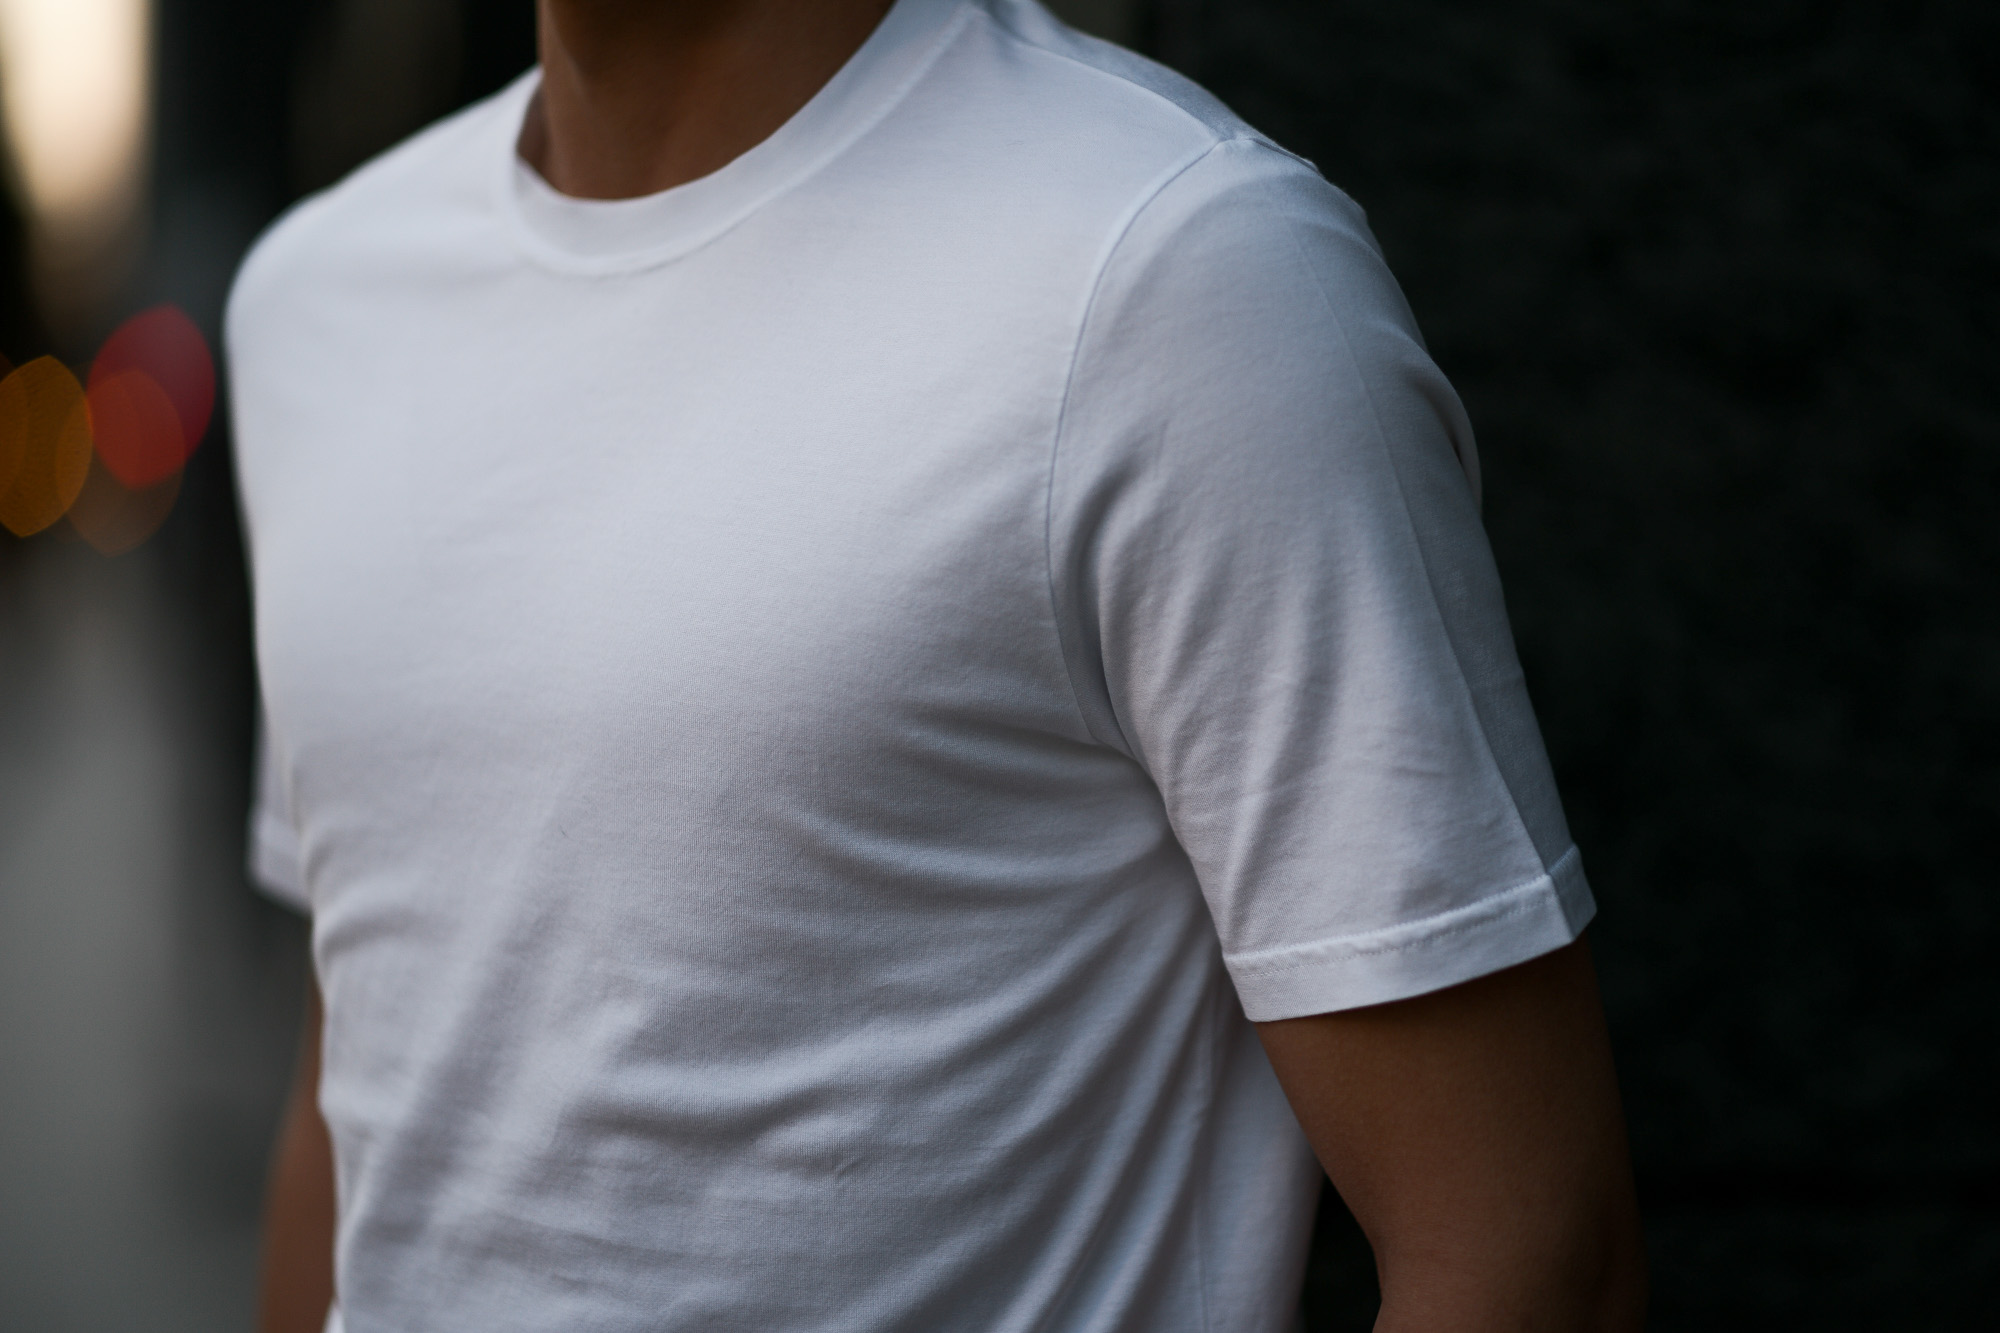 FEDELI(フェデーリ) Crew Neck T-shirt (クルーネック Tシャツ) ギザコットン Tシャツ WHITE (ホワイト・41) made in italy (イタリア製) 2020 春夏新作 愛知 名古屋 altoediritto アルトエデリット TEE